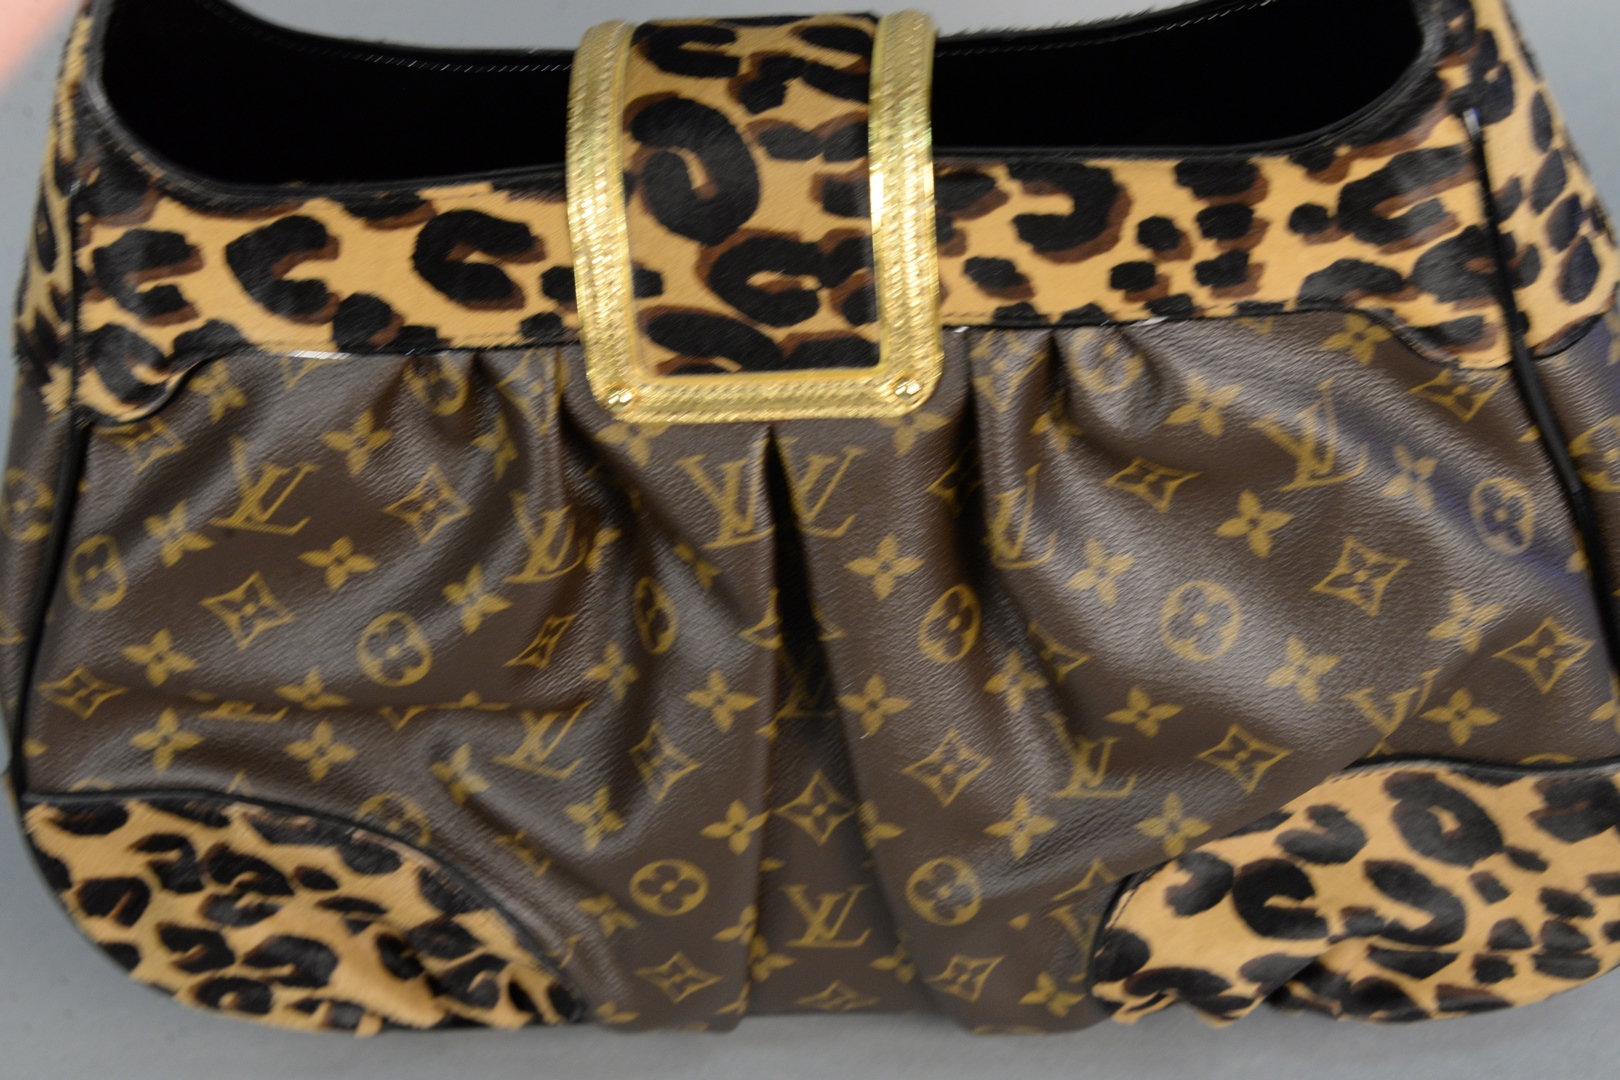 Sold at Auction: Louis Vuitton leopard print monogram handbag, 'Polly Leo'  having original box, dust bag, tags and receipt, new price $3,940.